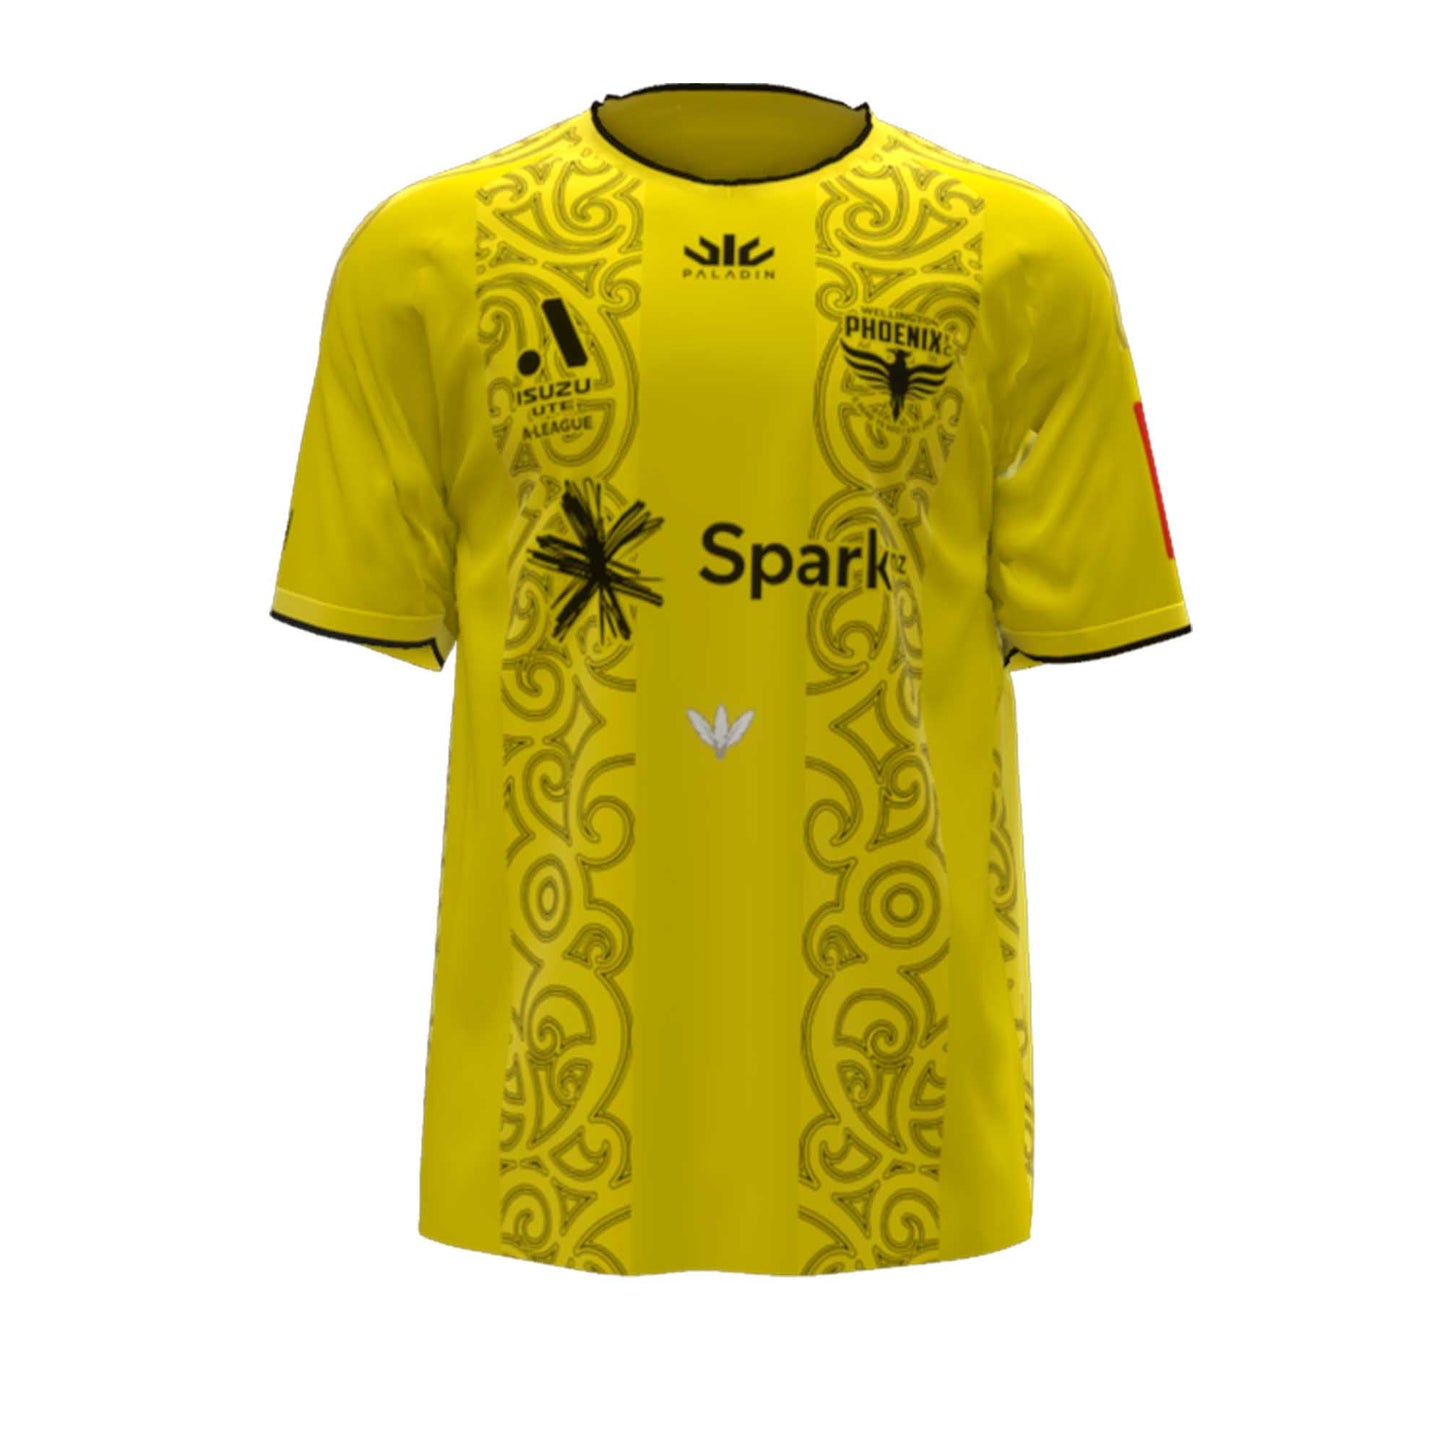 Wellington Phoenix A-League Replica Yellow Jersey - Kids